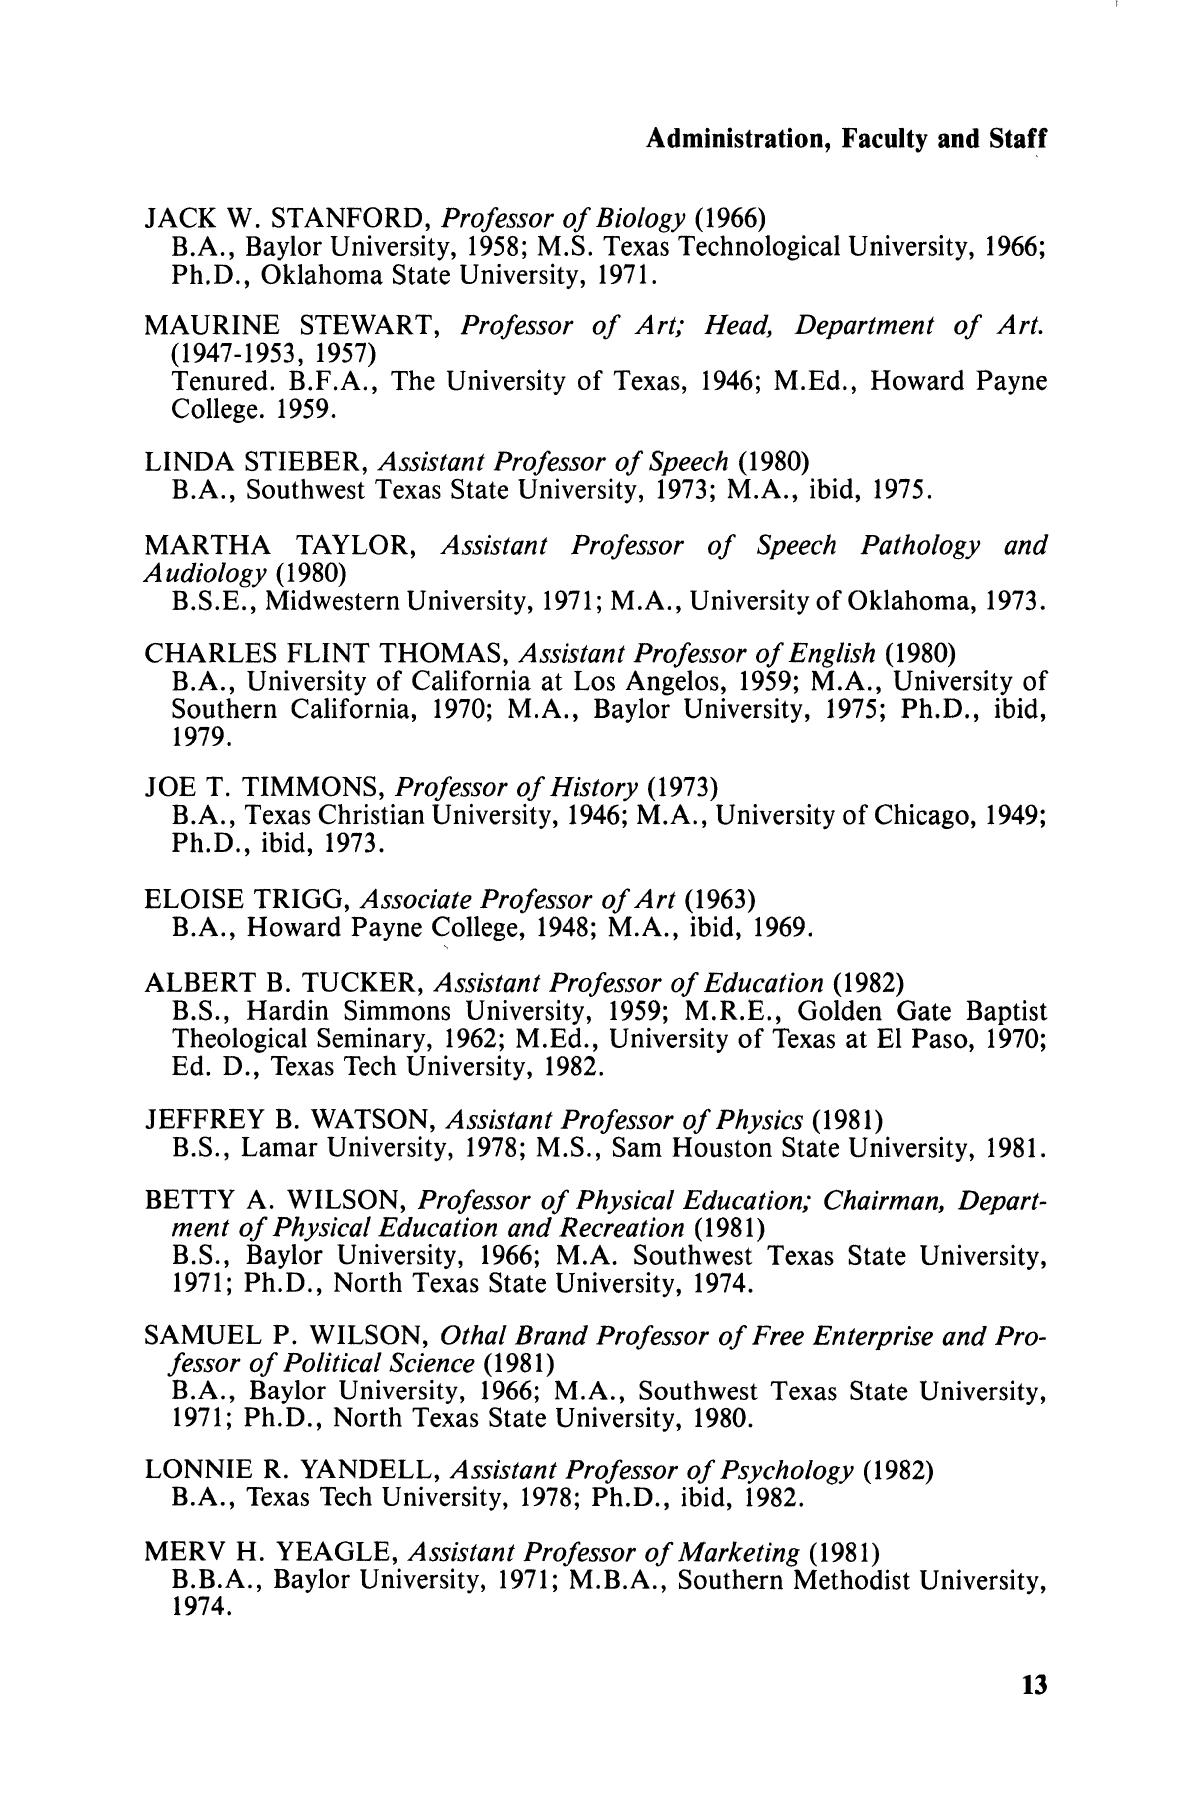 Catalog of Howard Payne University, 1983-1984
                                                
                                                    13
                                                